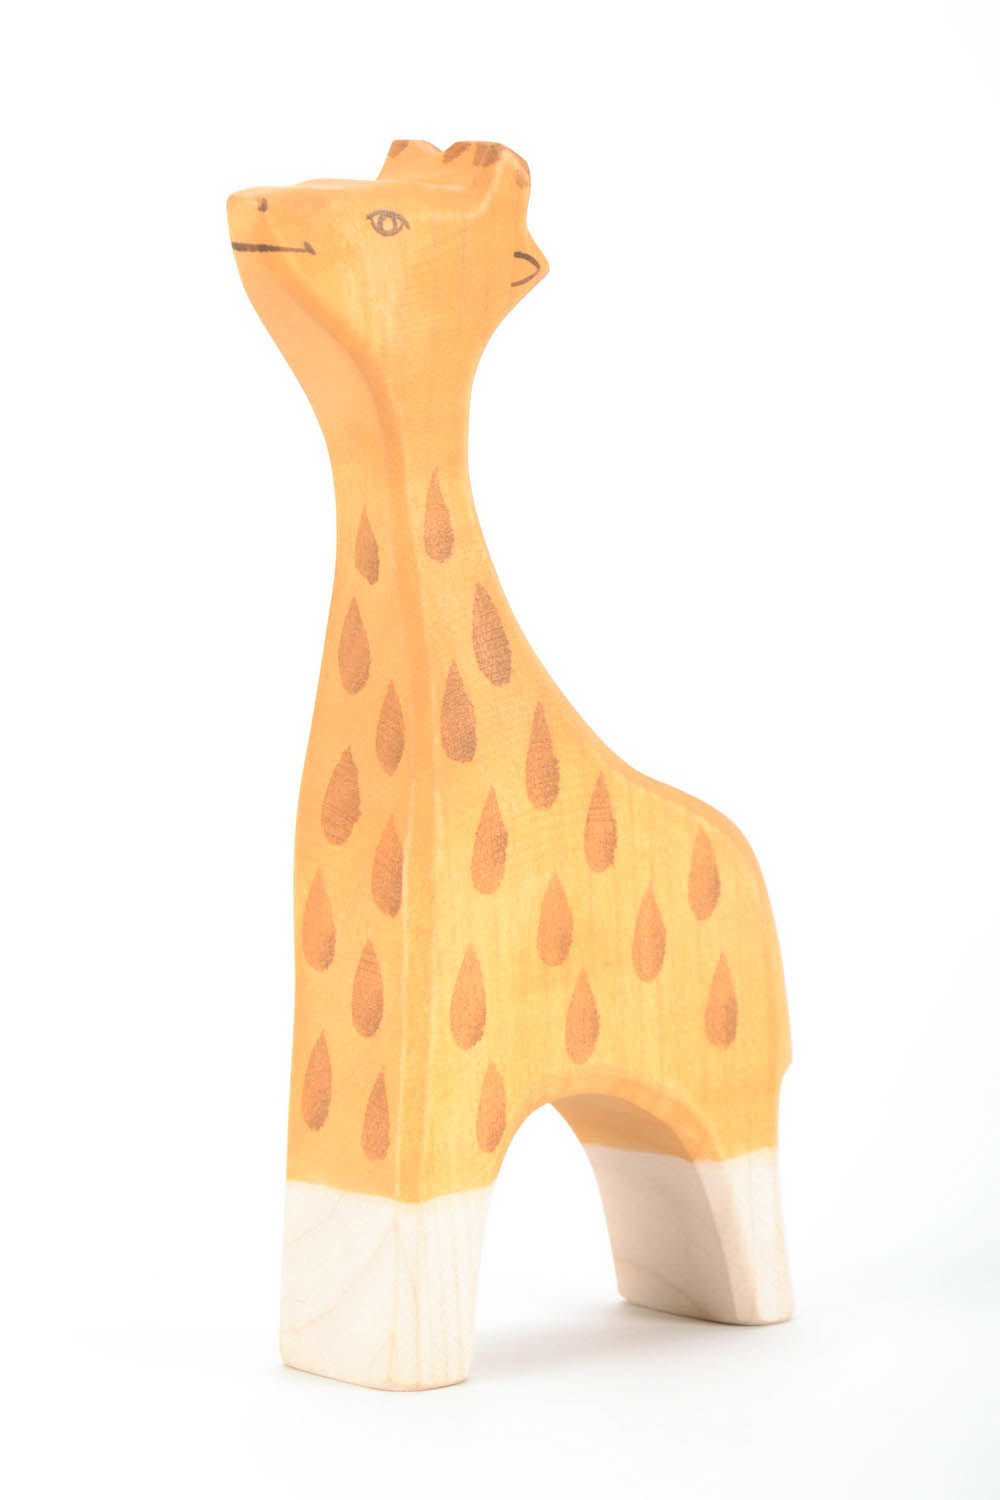 Jouet en bois artisanal Petite girafe  photo 3